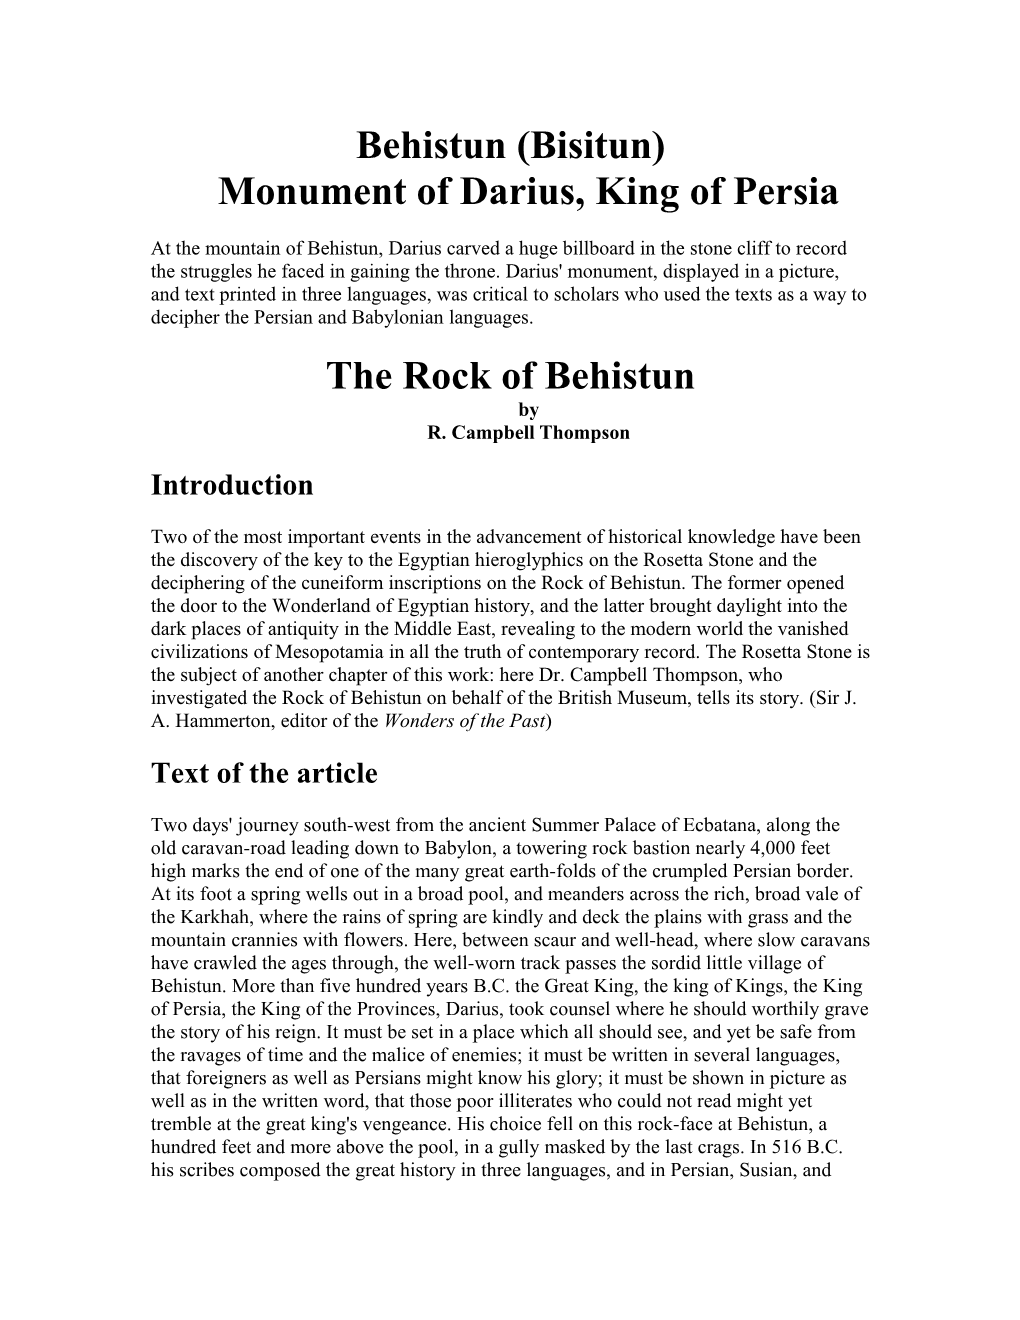 Behistun (Bisitun)Monument of Darius, King of Persia